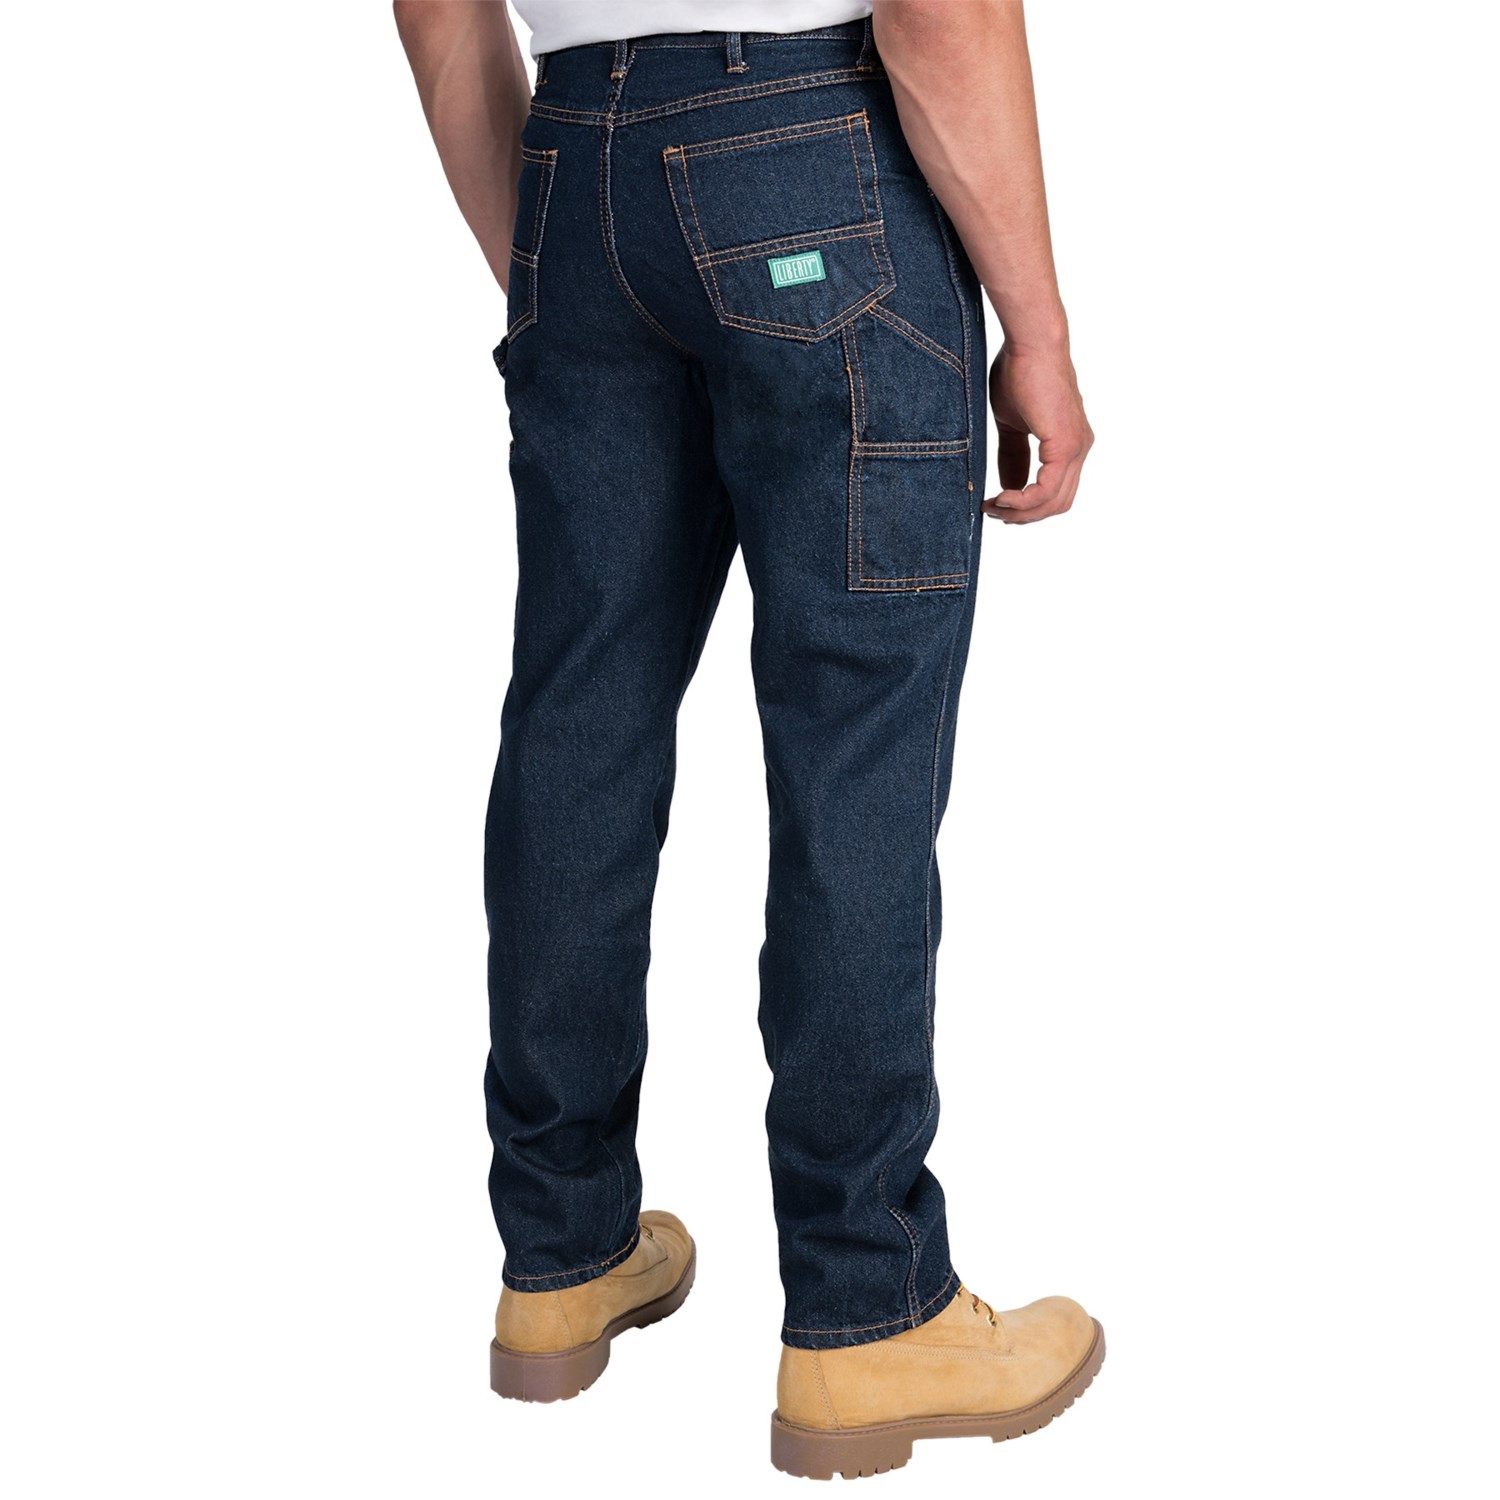 Walls Ranchwear Liberty Carpenter Jeans (For Men) - Save 84%